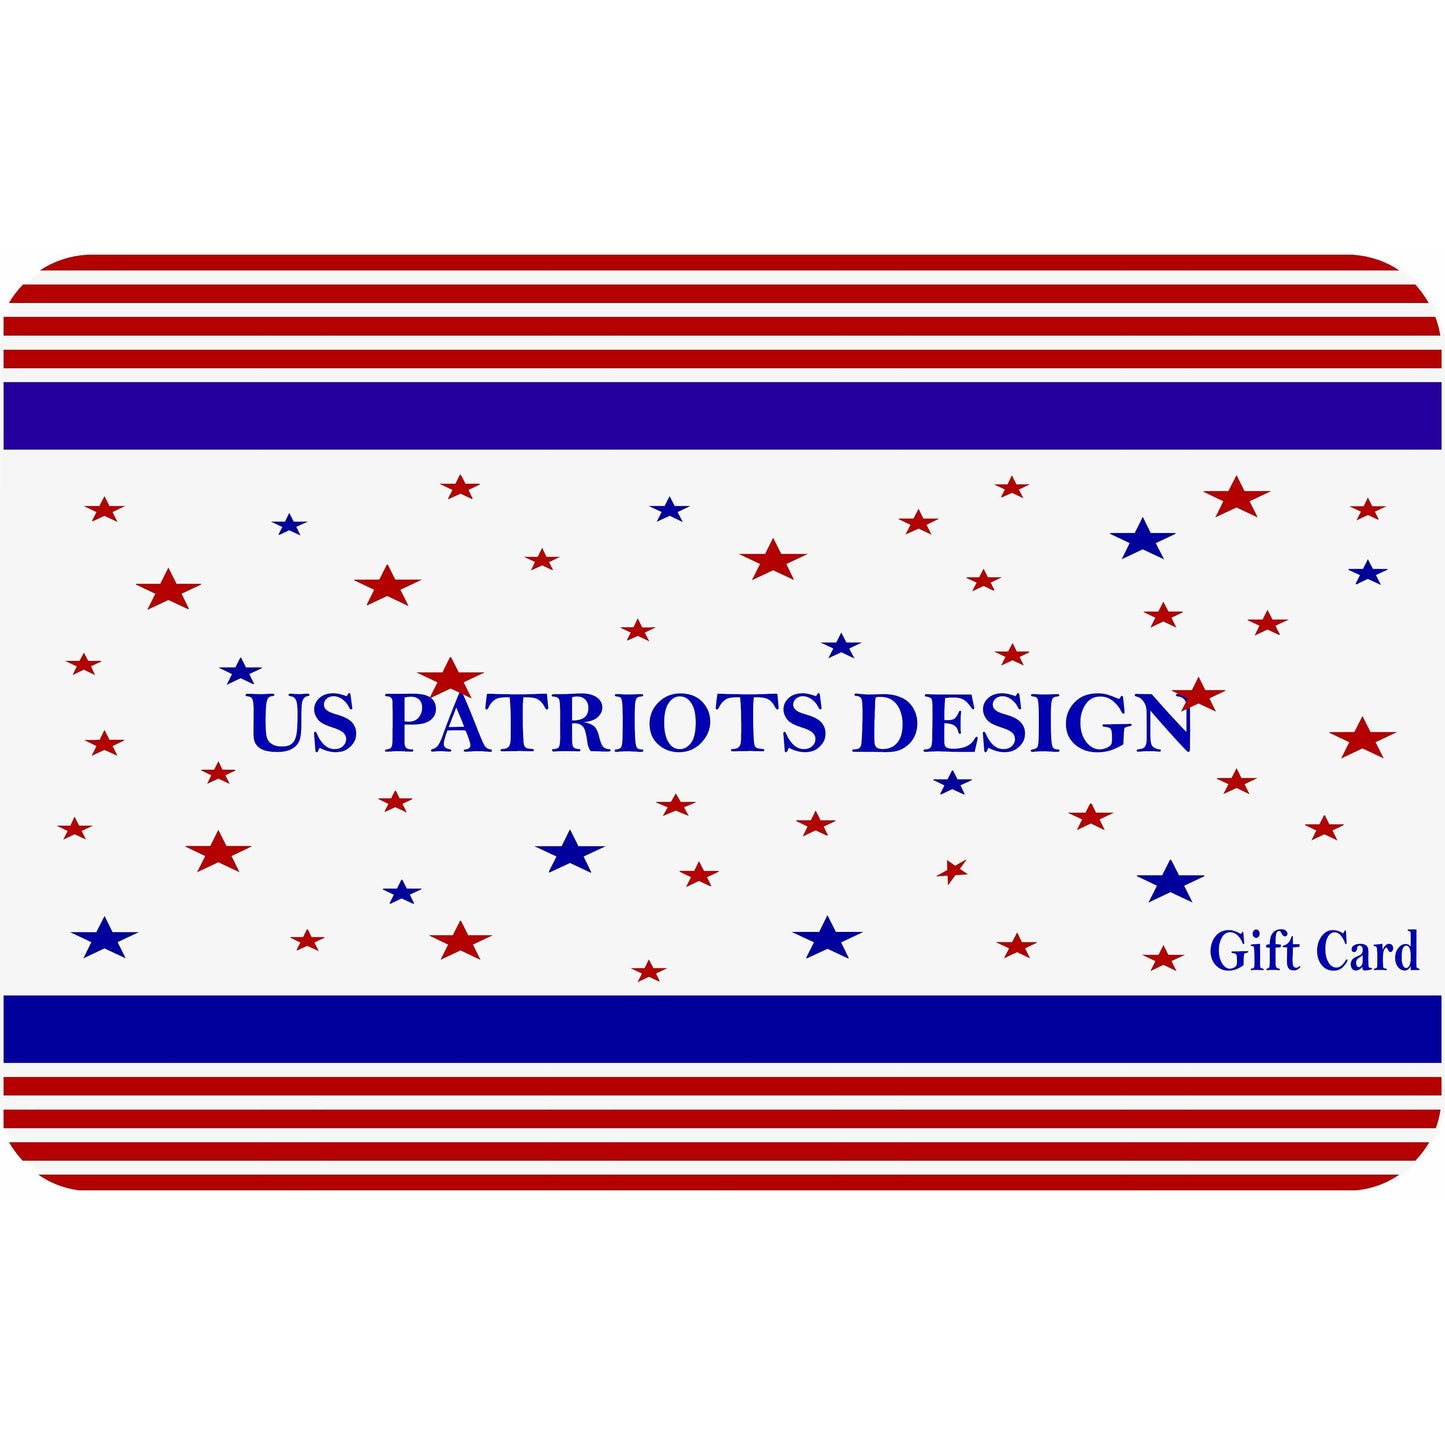 US PATRIOTS DESIGN Gift Card